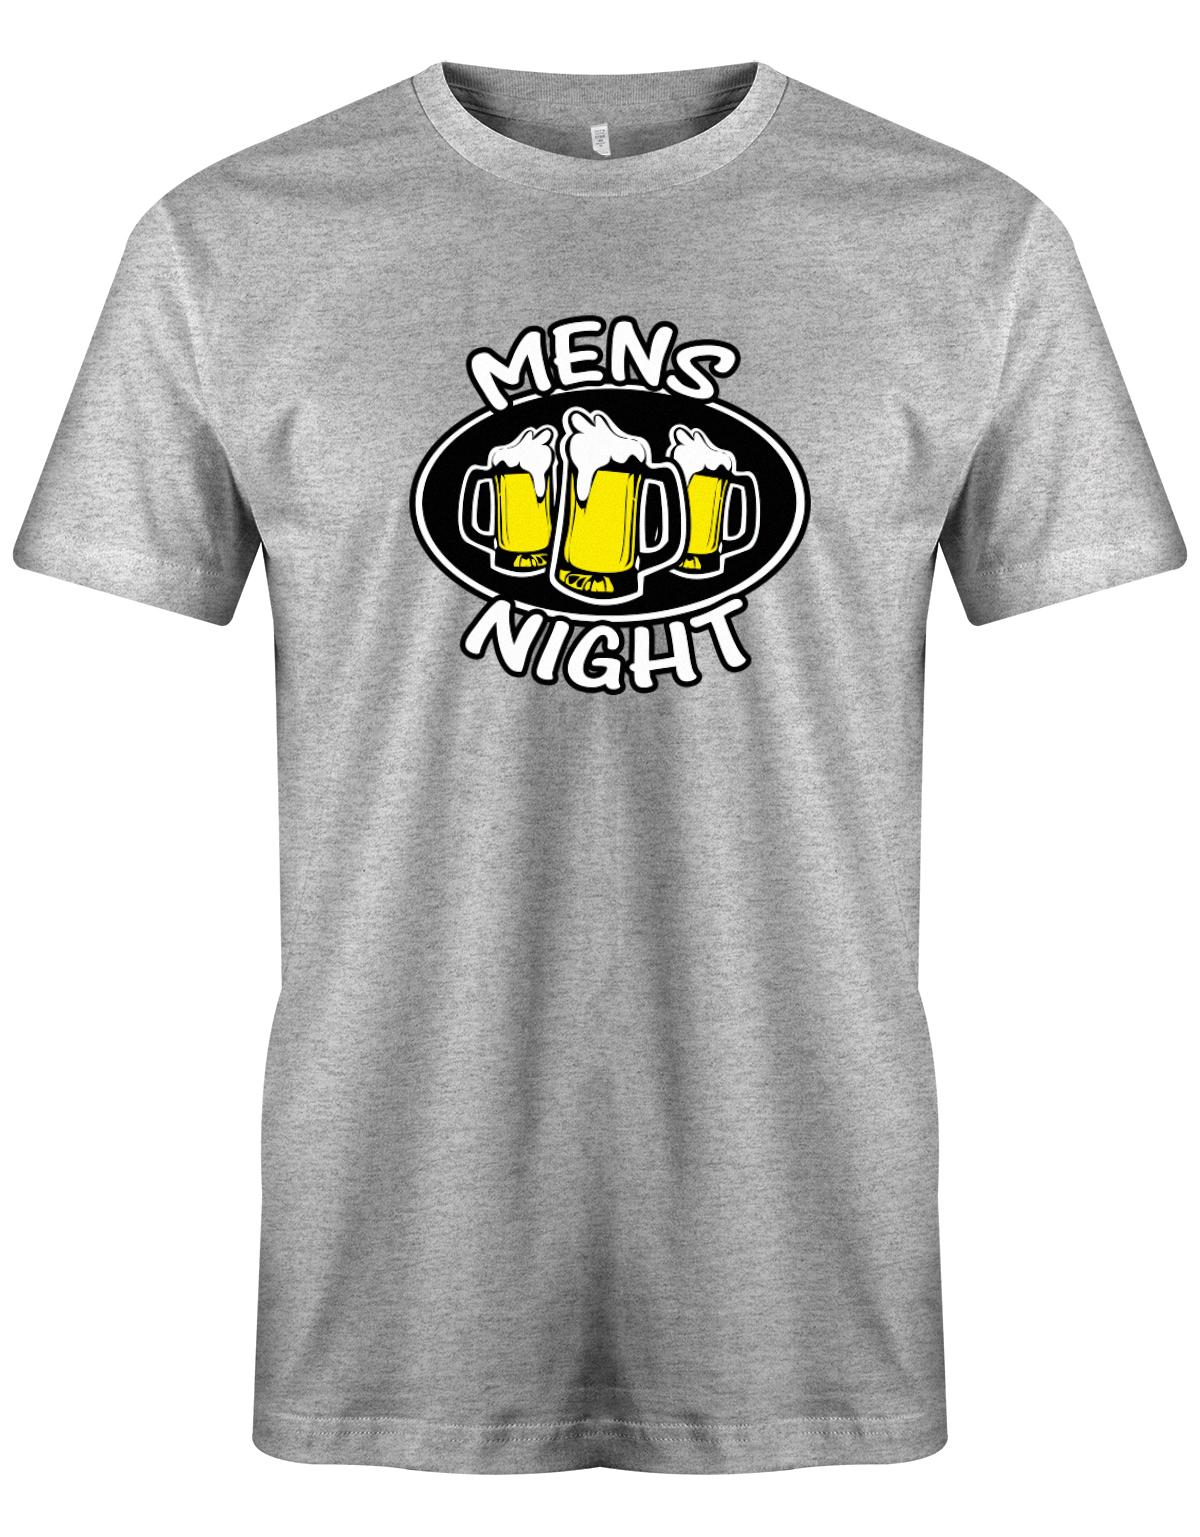 Mens-Night-Bier-Herren-Shirt-Grau